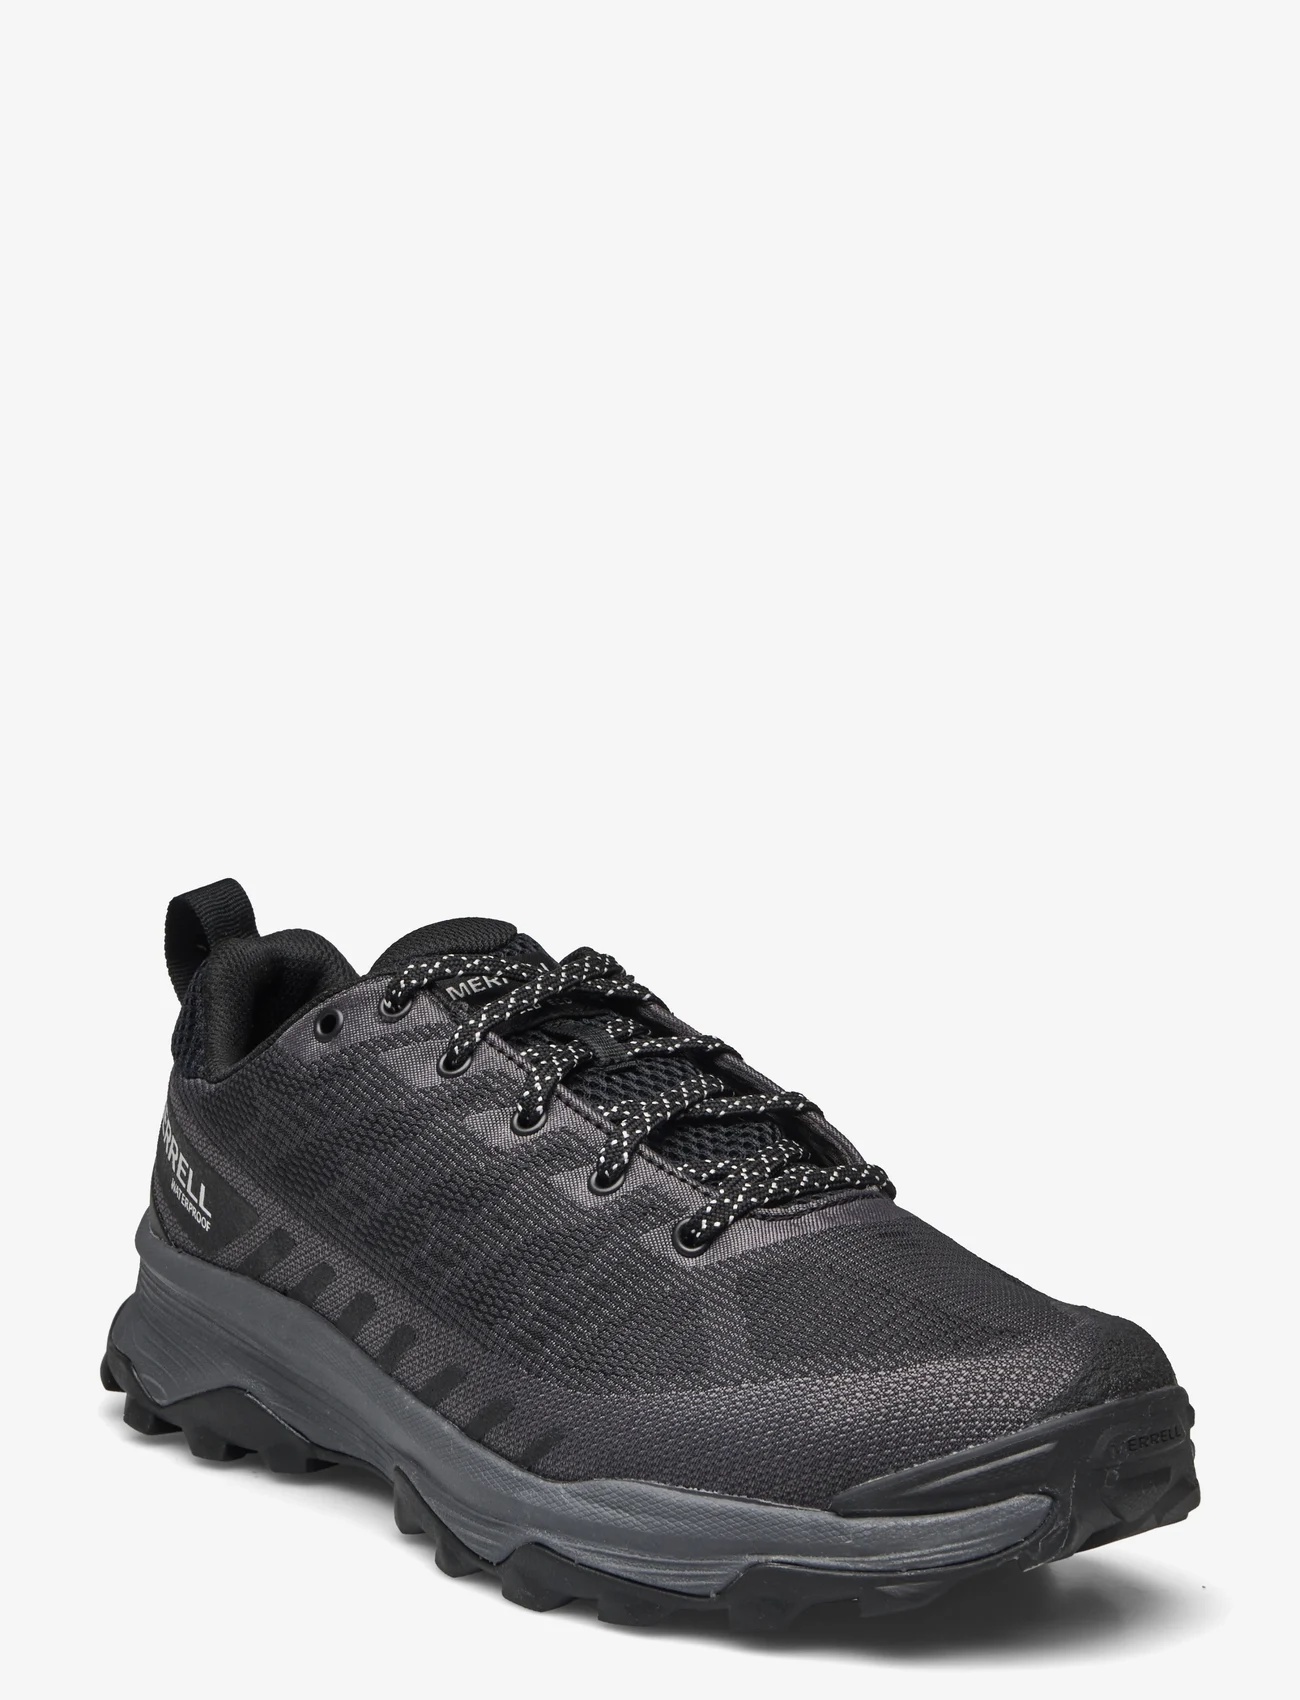 Merrell - Men's Speed Eco WP - Black/Asphalt - hiking shoes - black/asphalt - 0